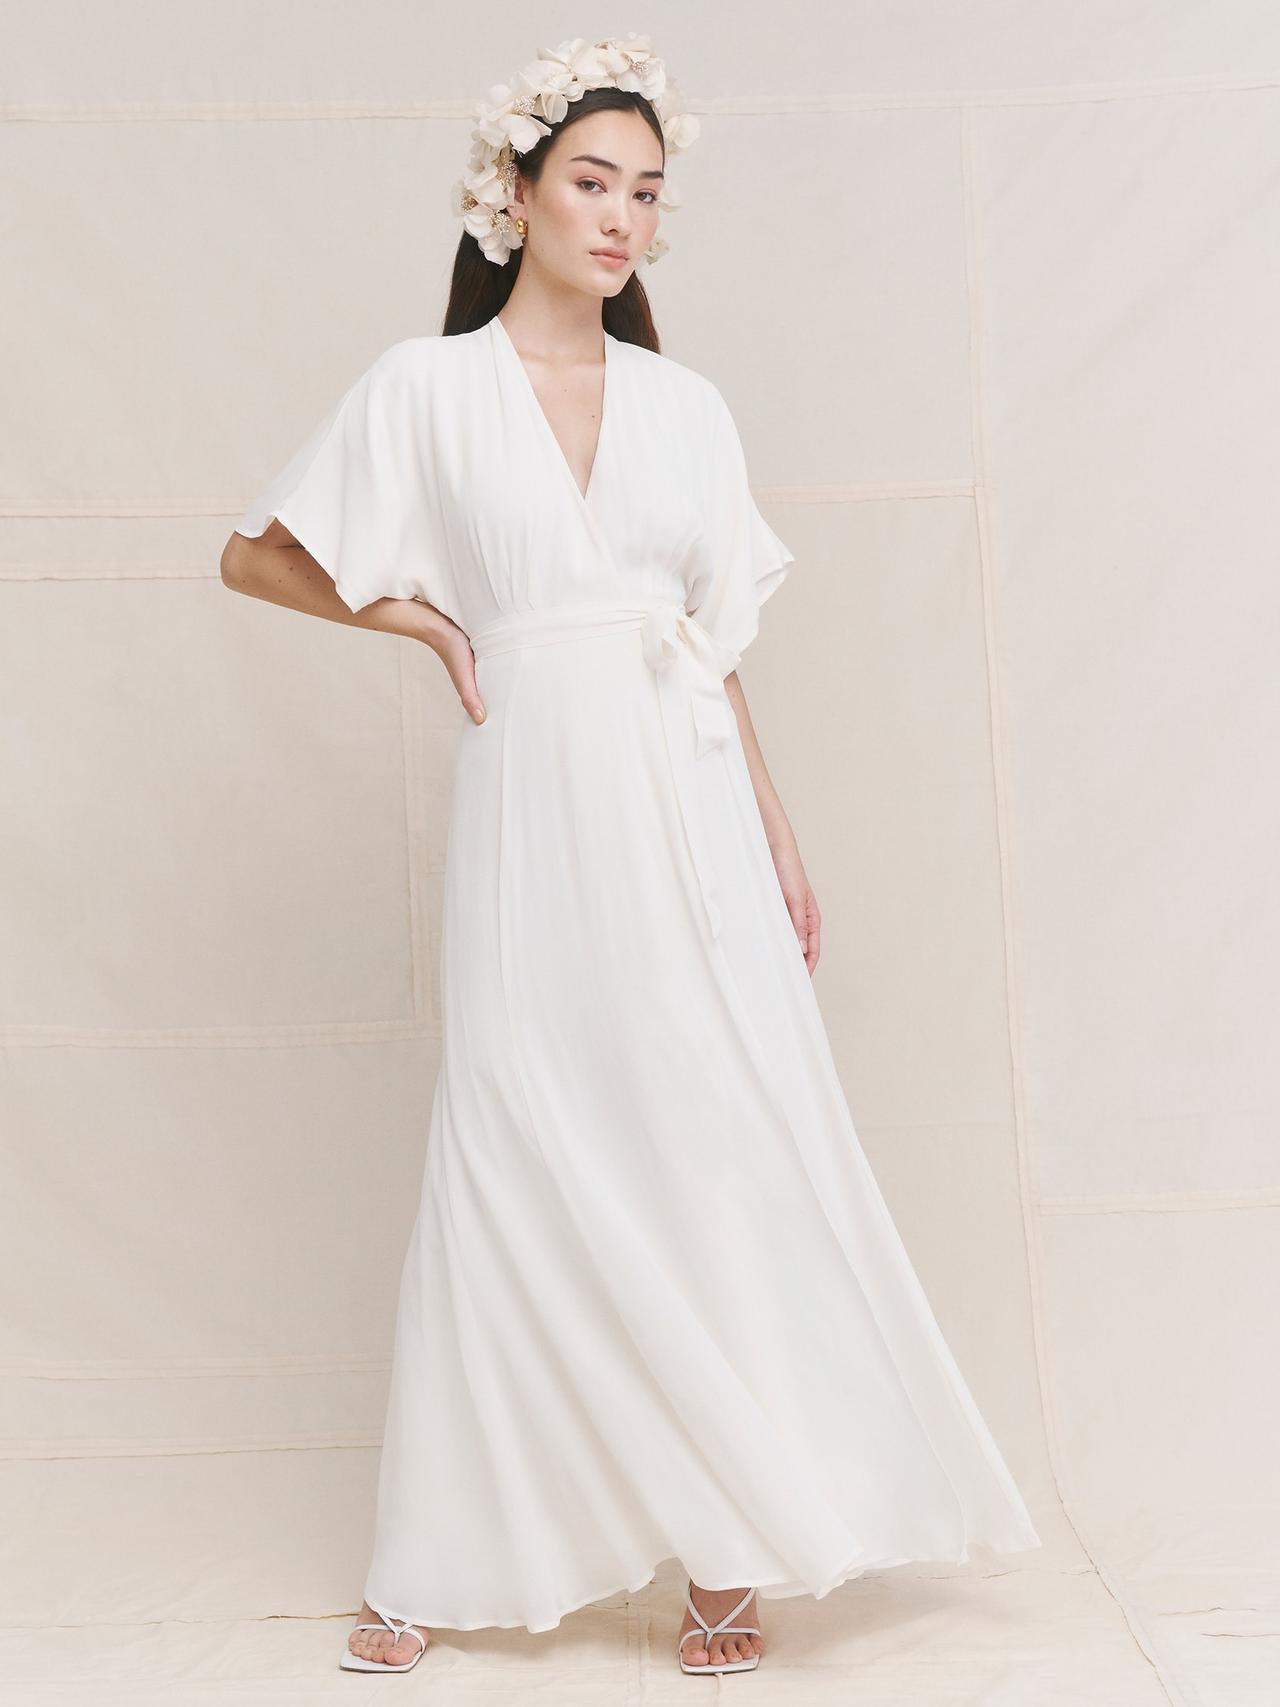 Model wearing a draping wedding dress